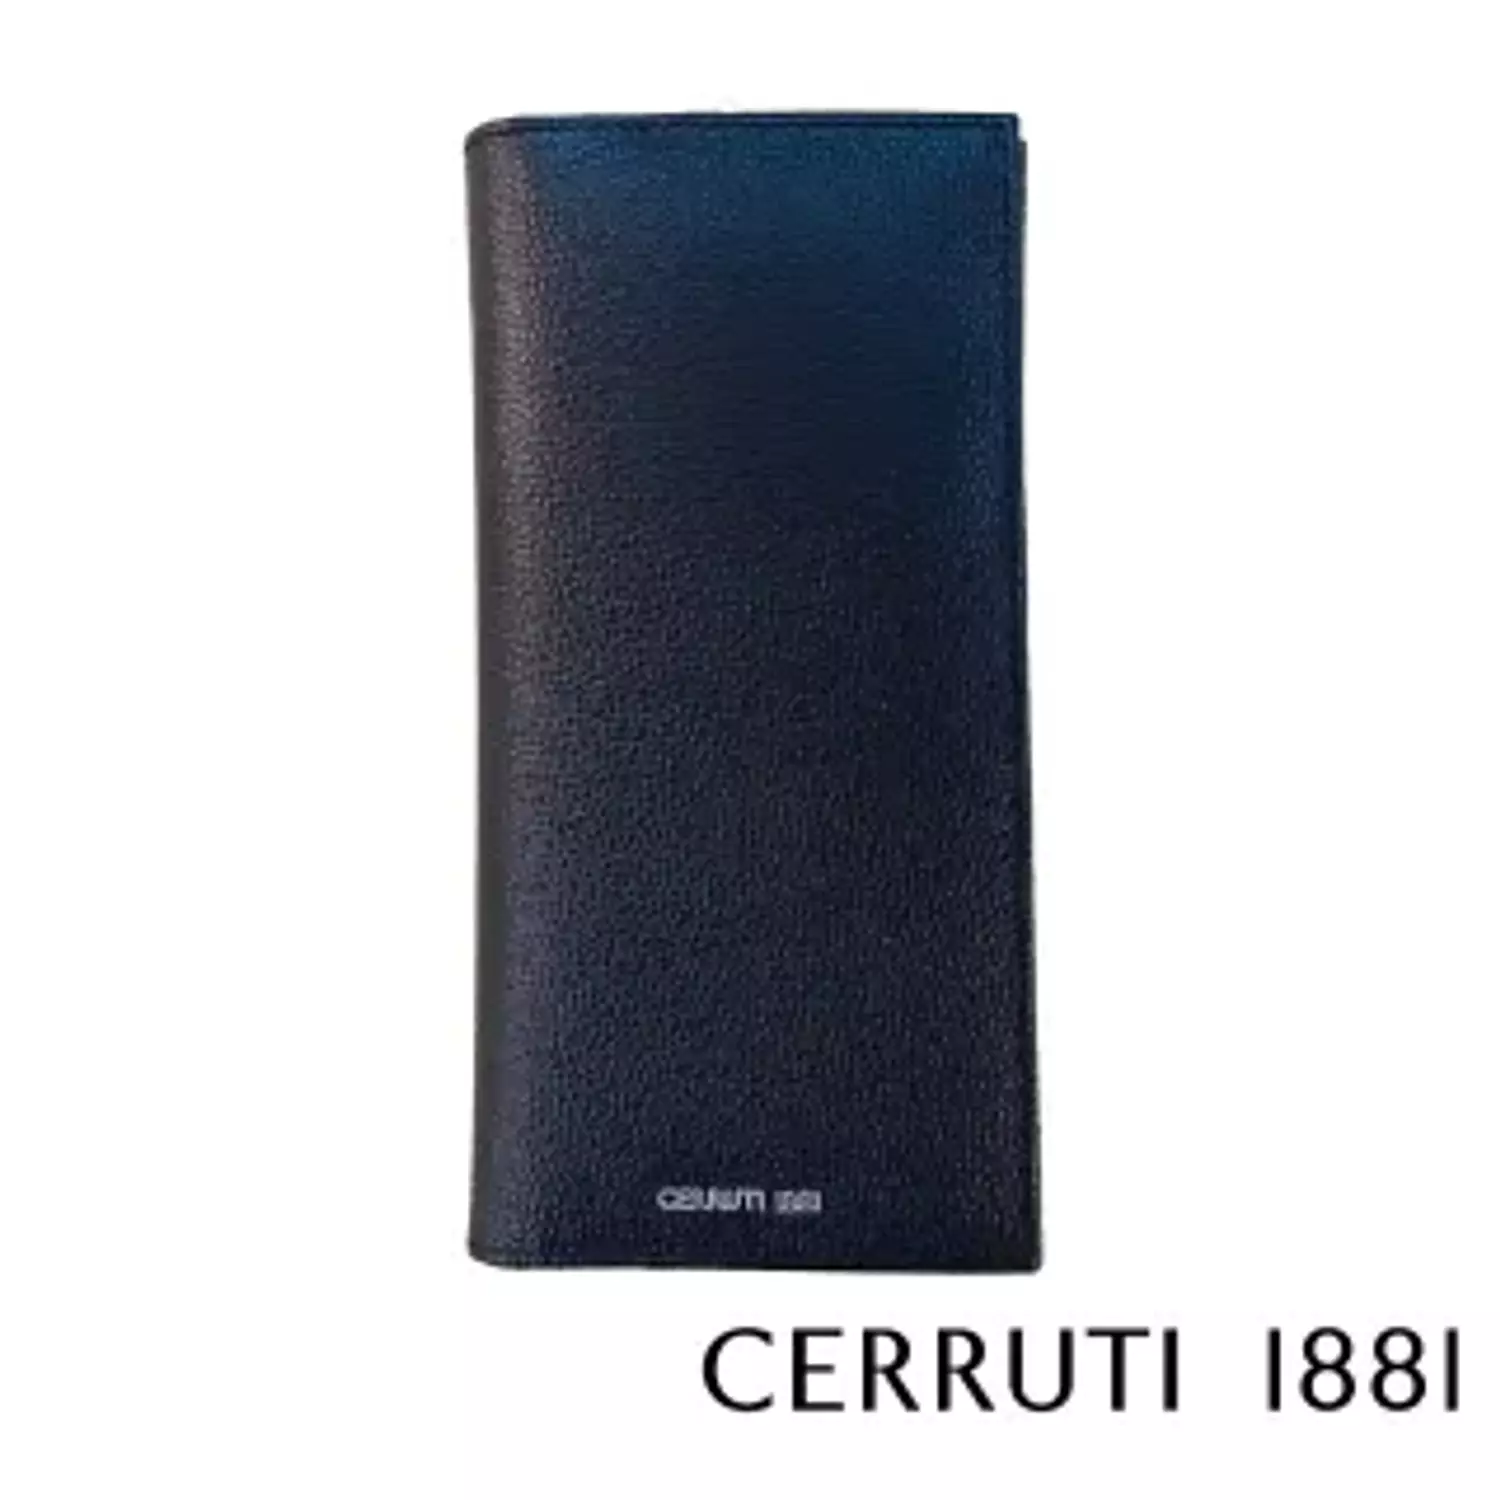 Cerruti1881 - Wallet For Men Calf Leather Black - CEPU05398M 0